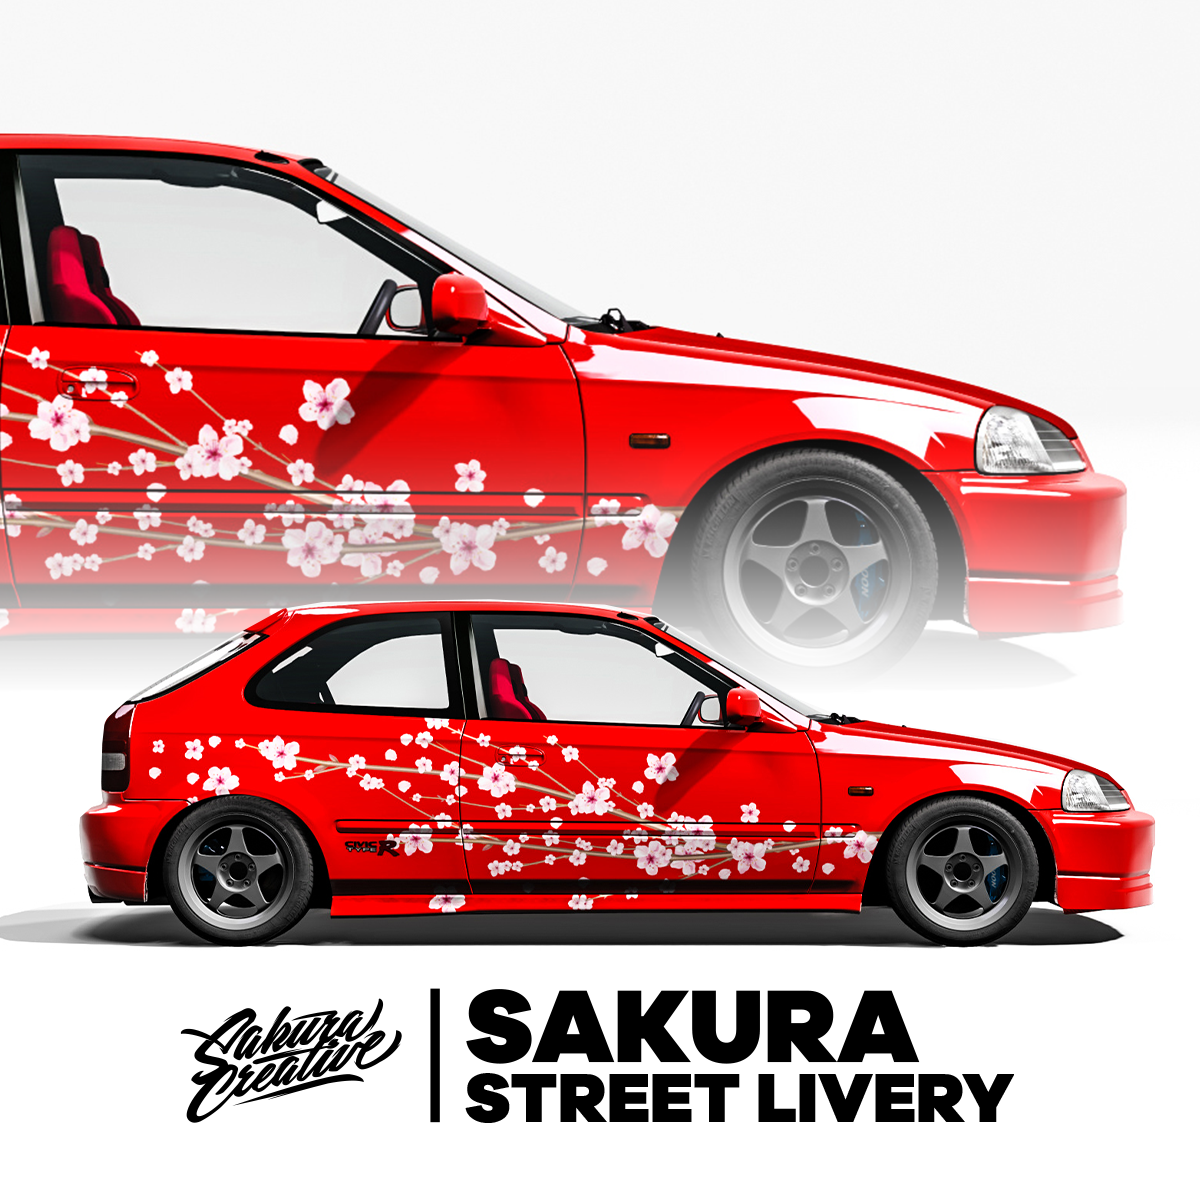 Sakura Street Livery